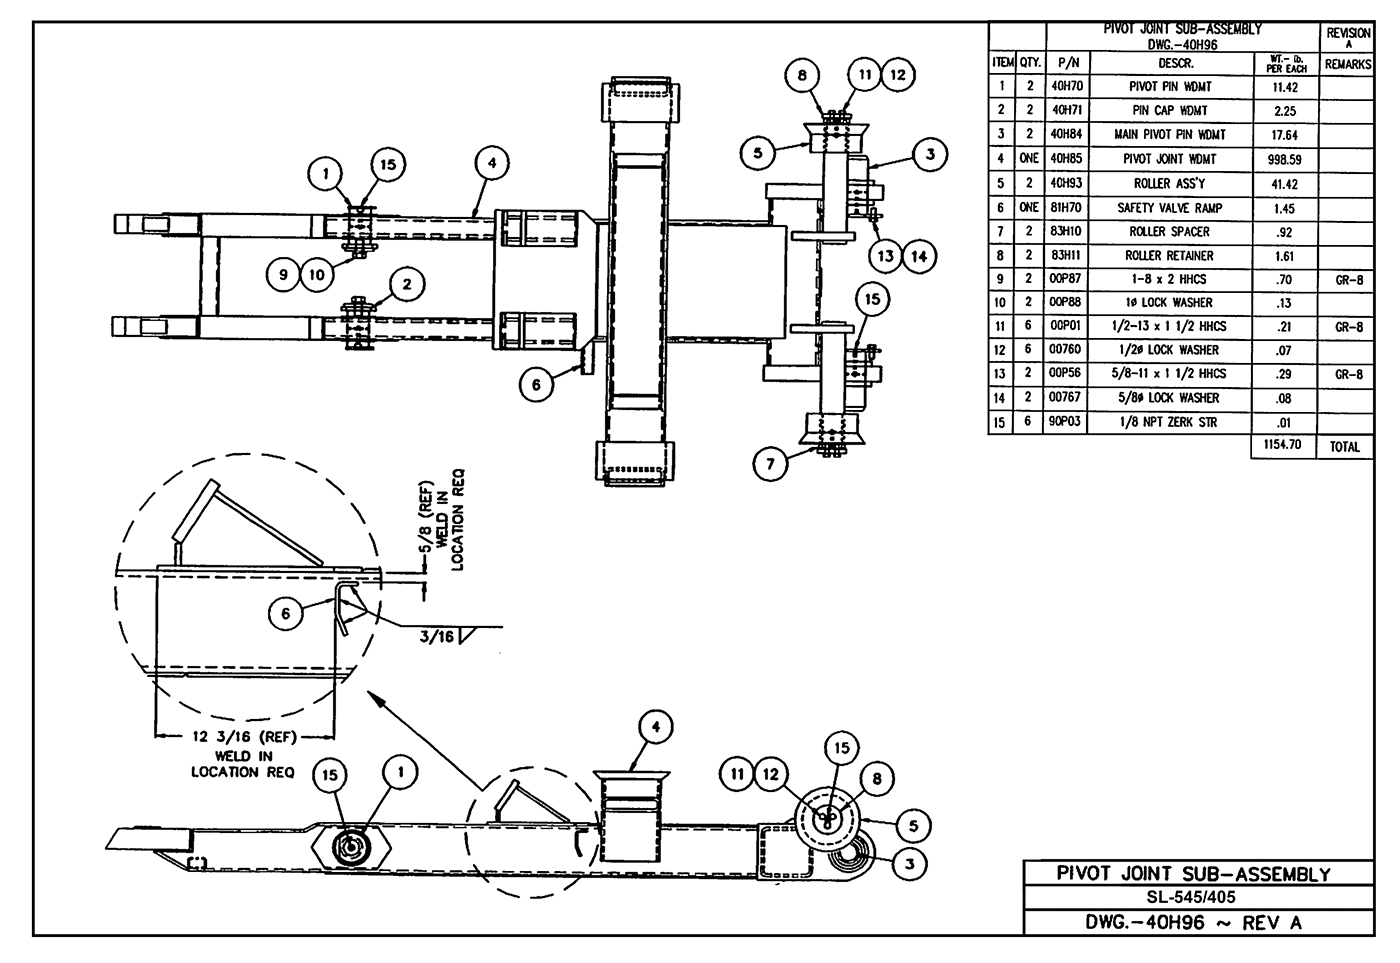 SL-545/405 Pivot Joint Sub-Assembly Diagram